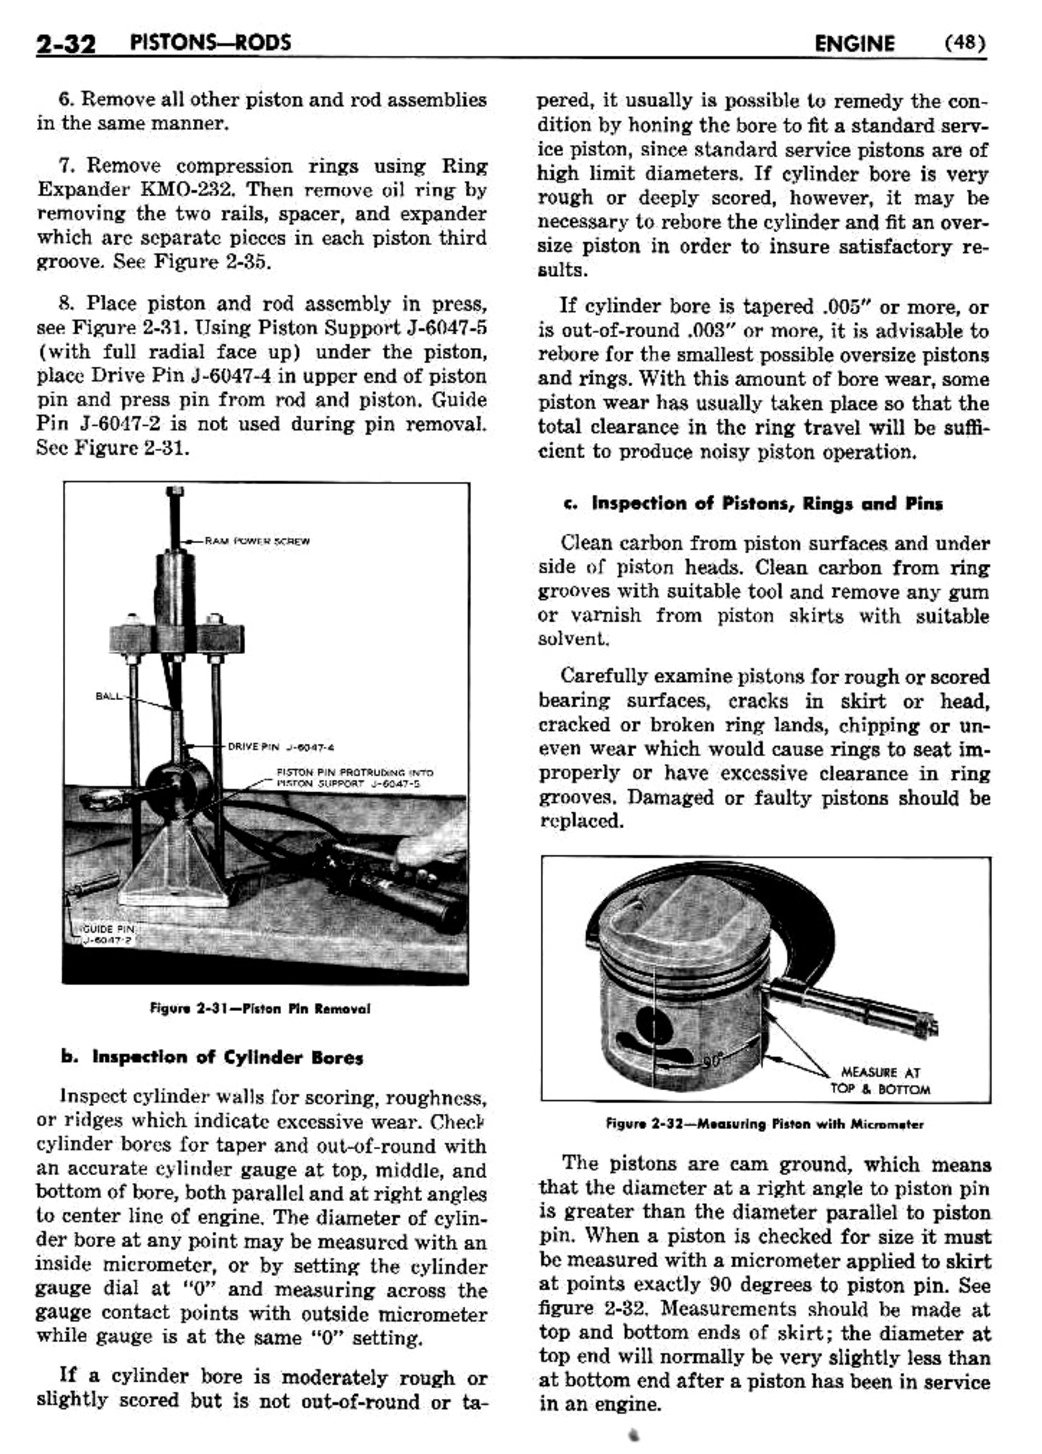 n_03 1956 Buick Shop Manual - Engine-032-032.jpg